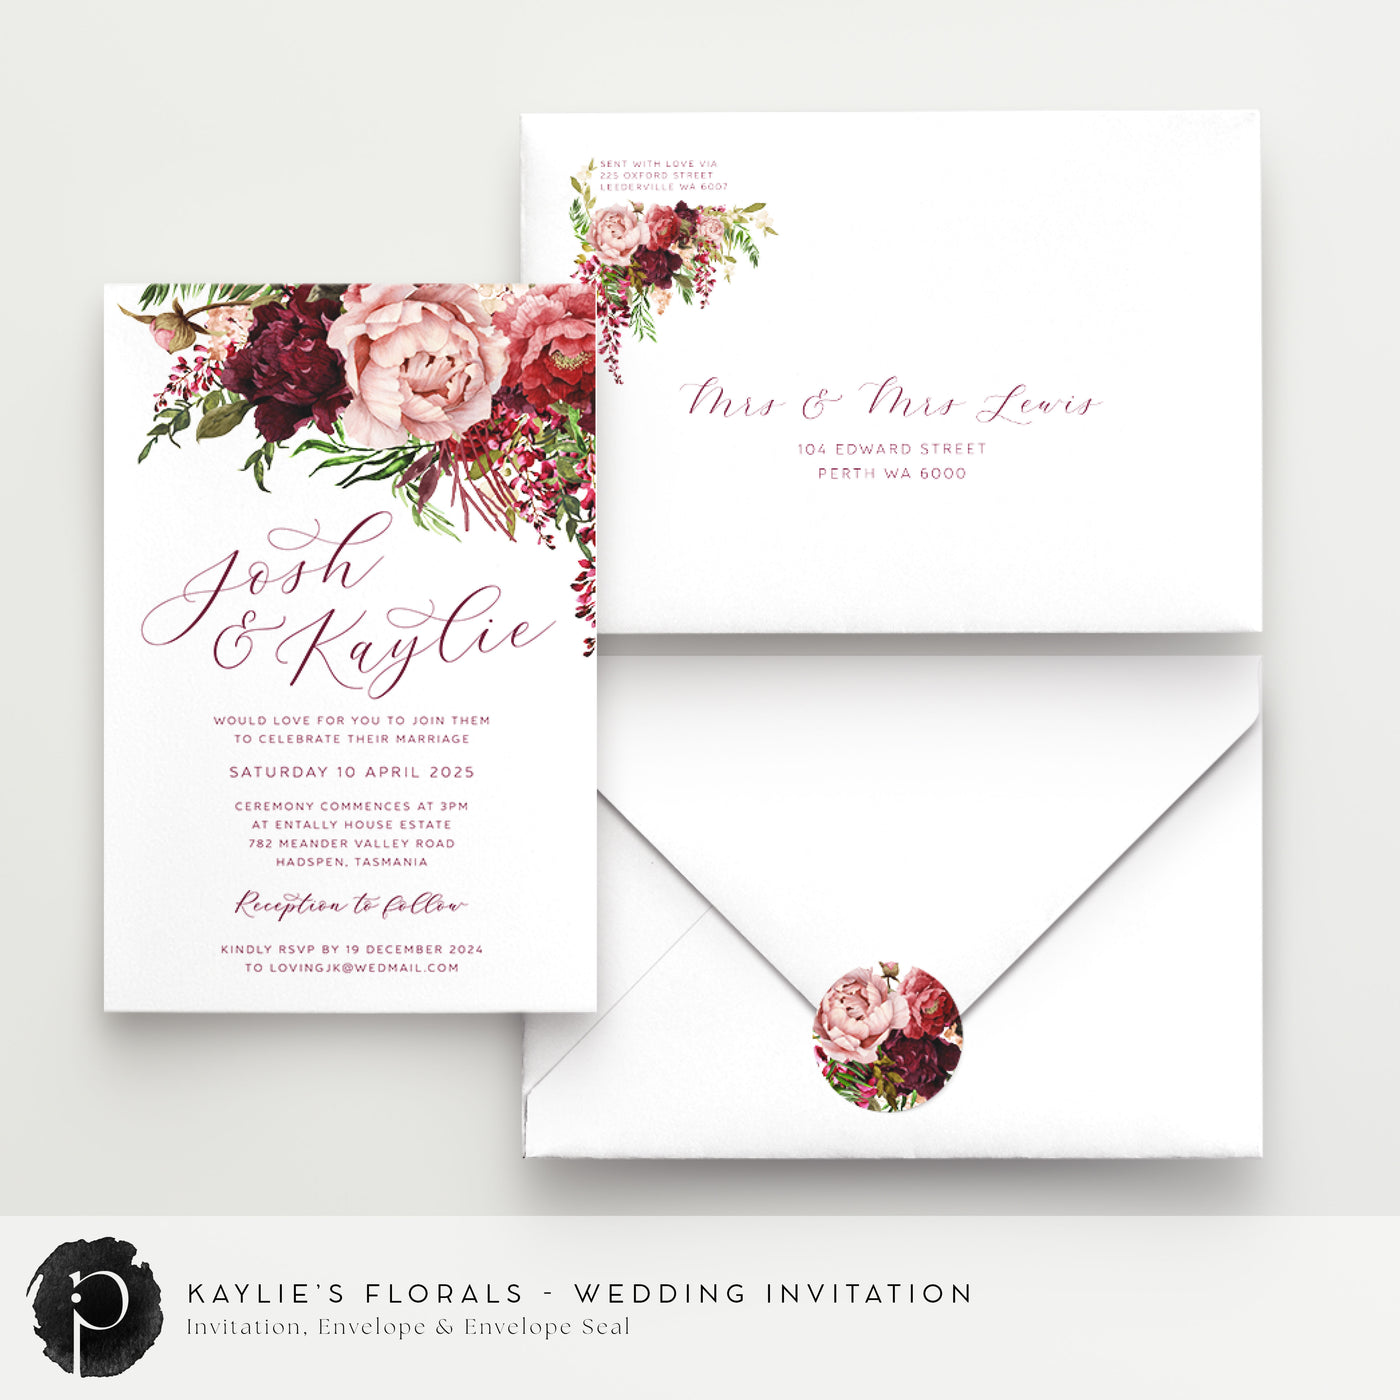 Kaylie's Florals - Wedding Invitations